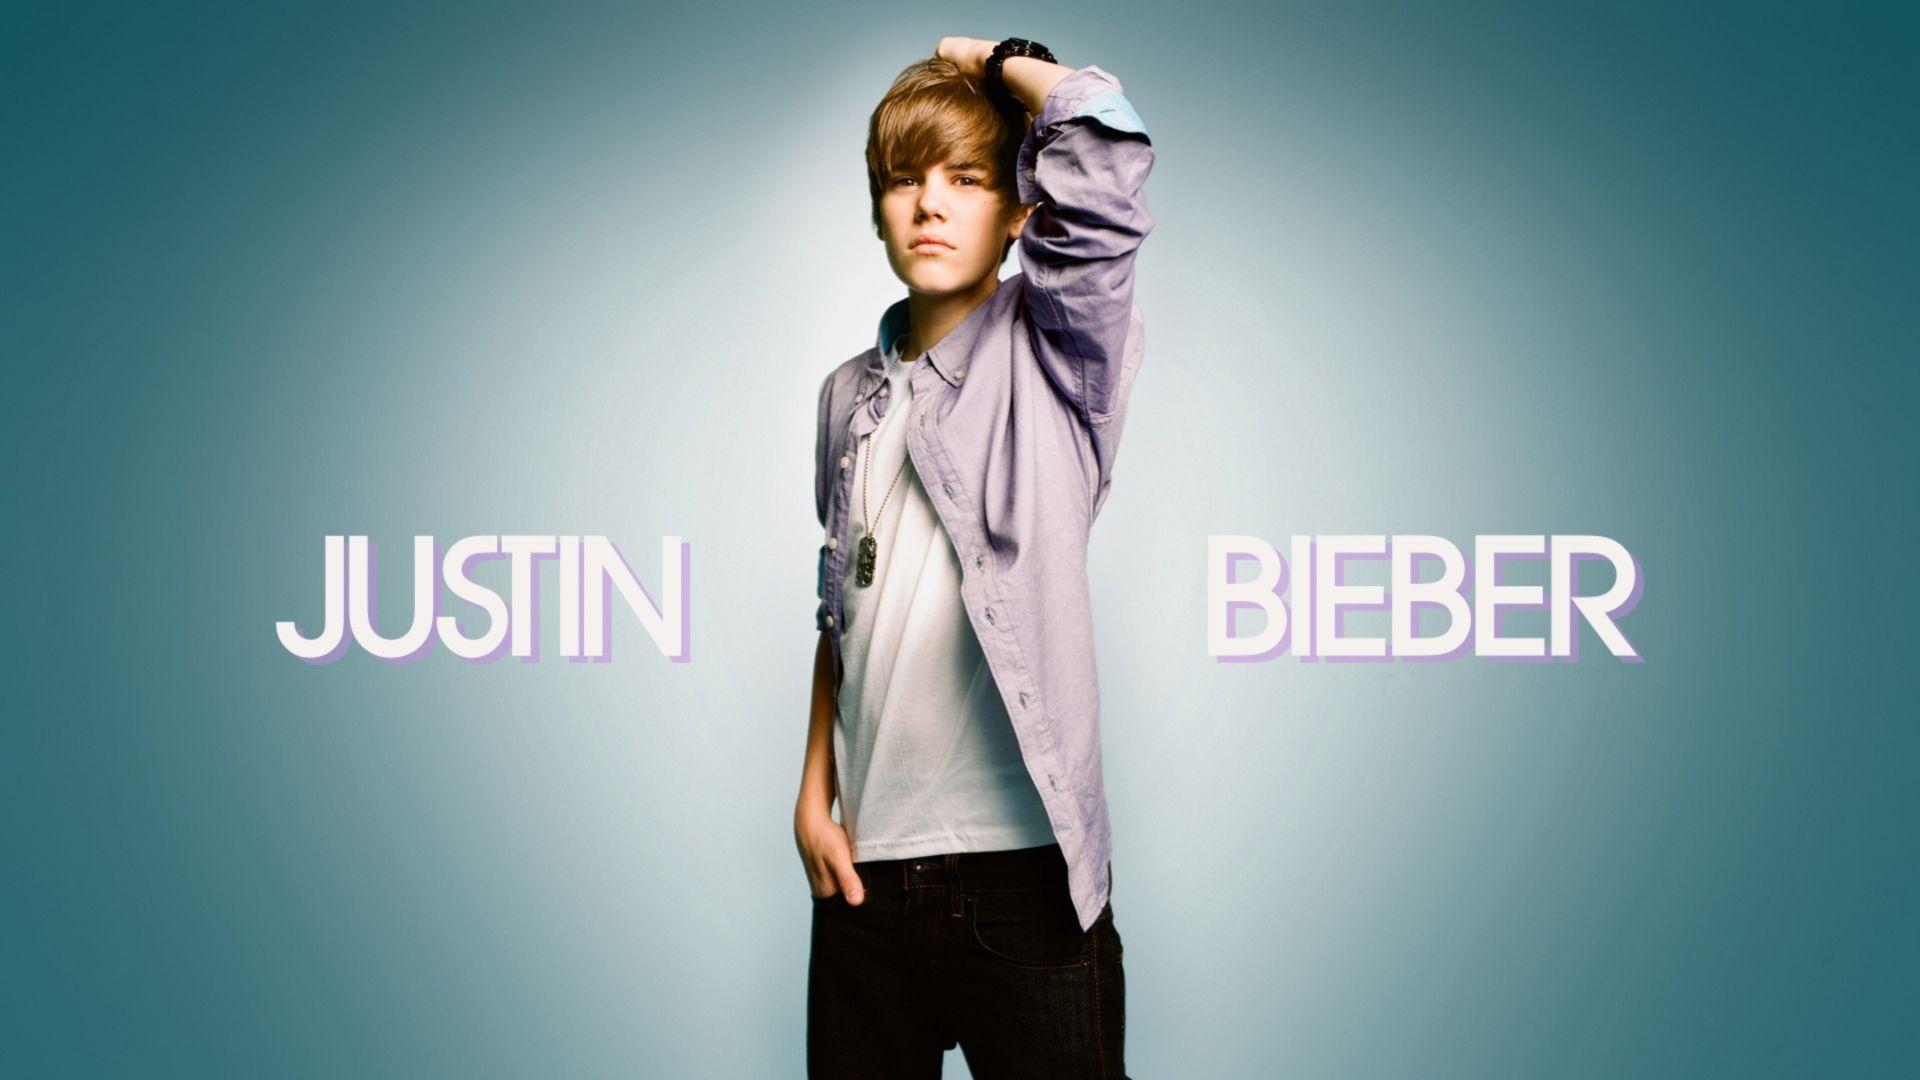 Justin Bieber Wallpaper Download